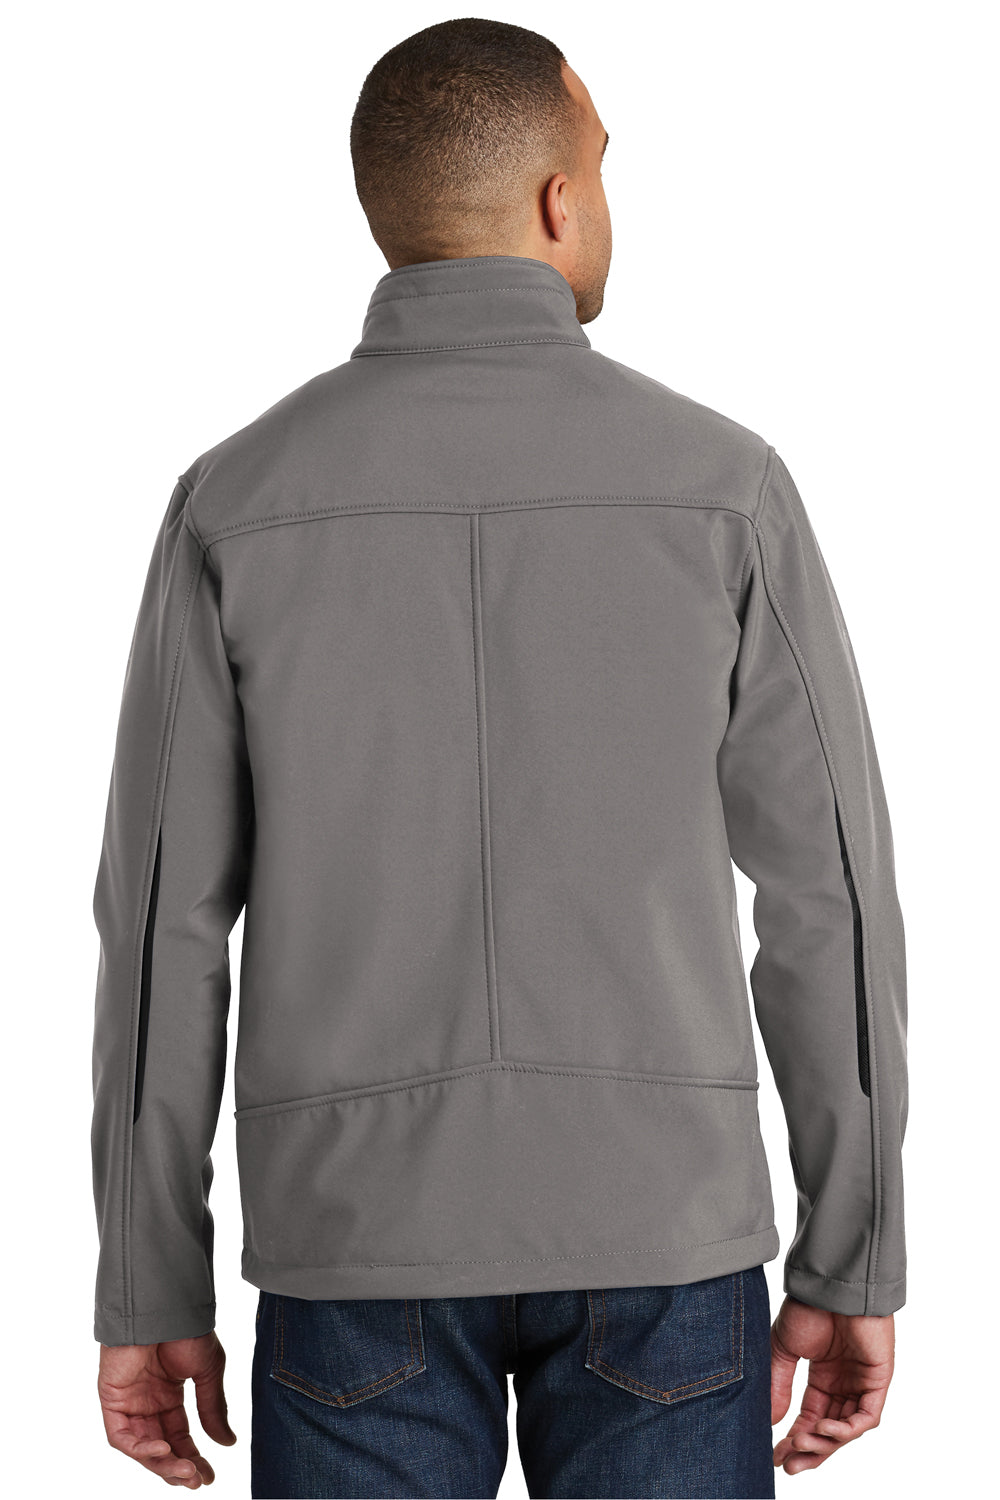 Port Authority J324 Mens Welded Wind & Water Resistant Full Zip Jacket Smoke Grey Back